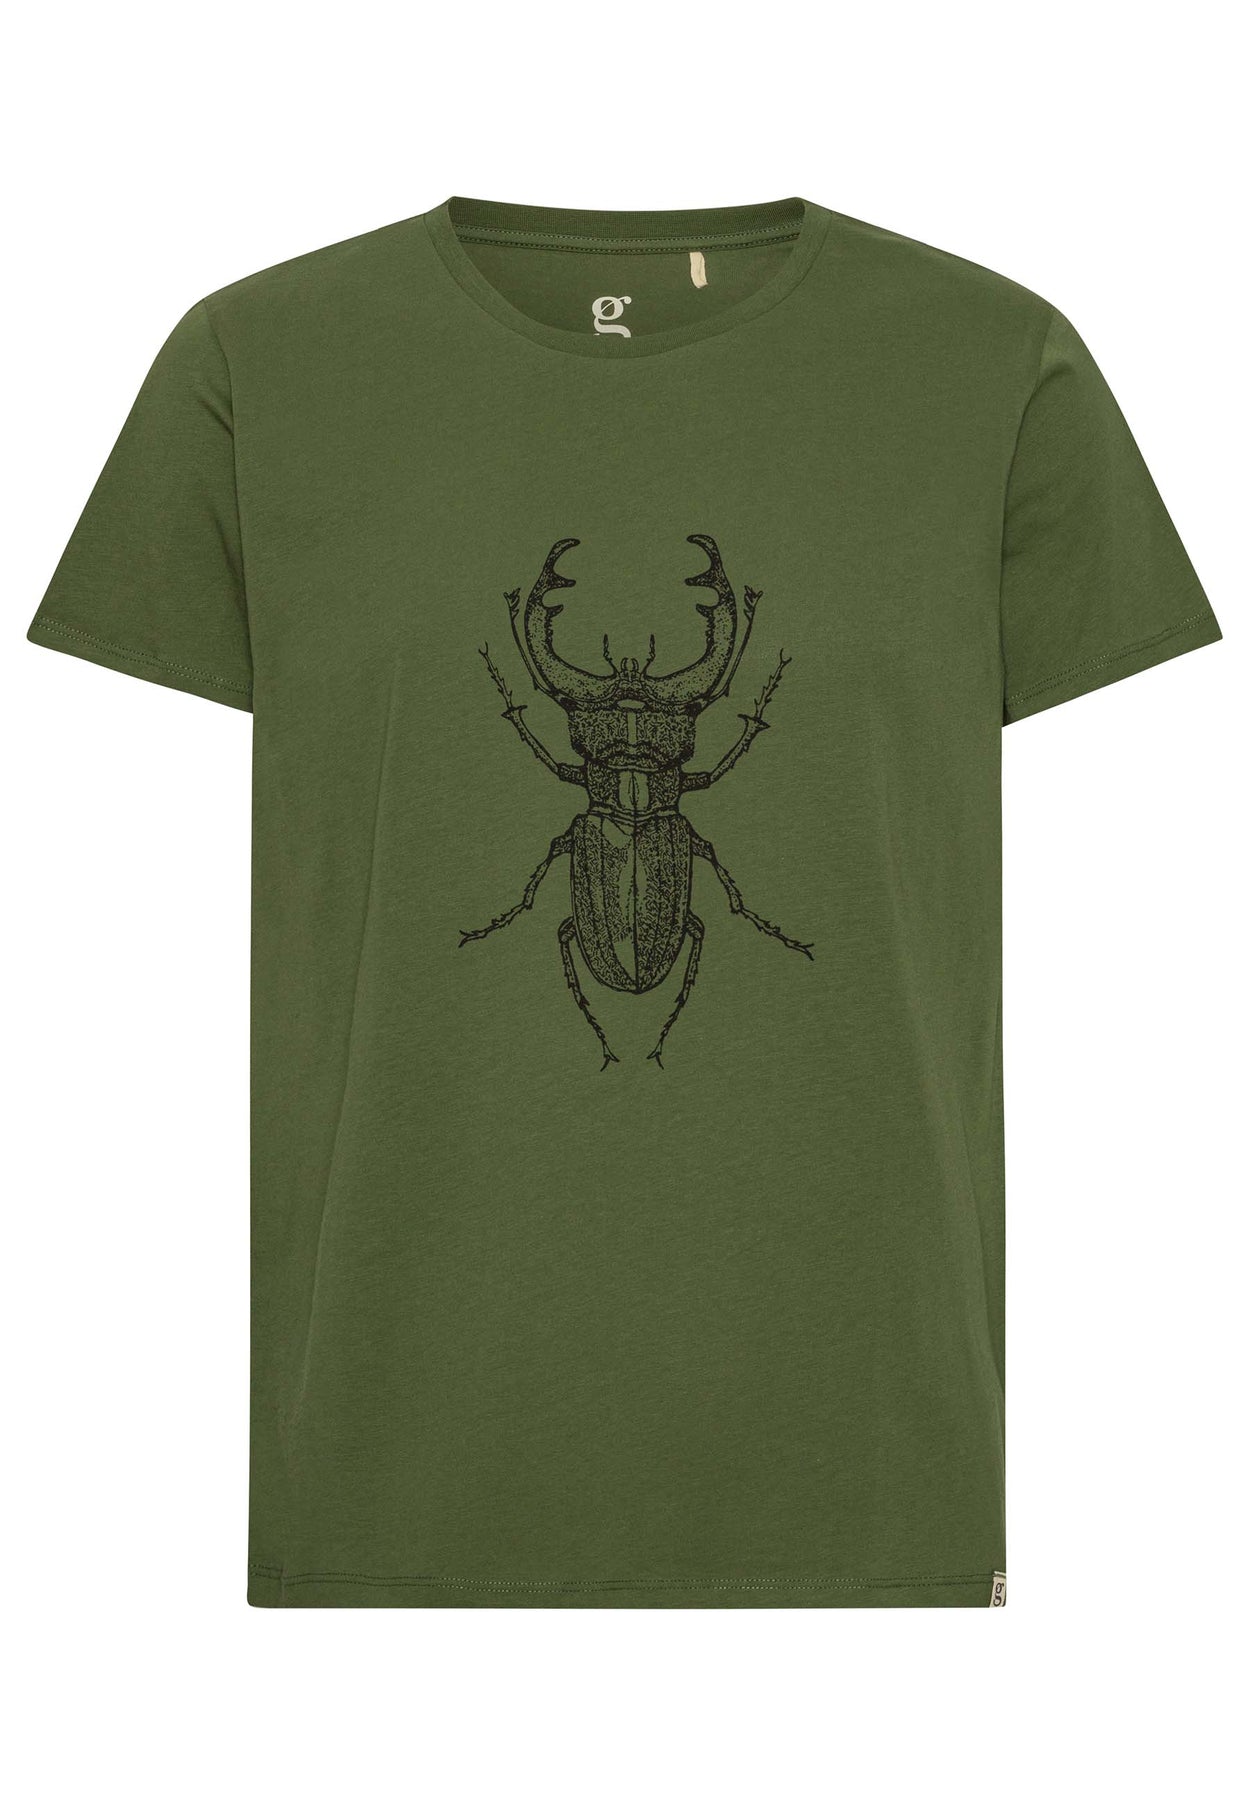 GROBUND Alfie t-shirten - den i mosgrøn med eghjort